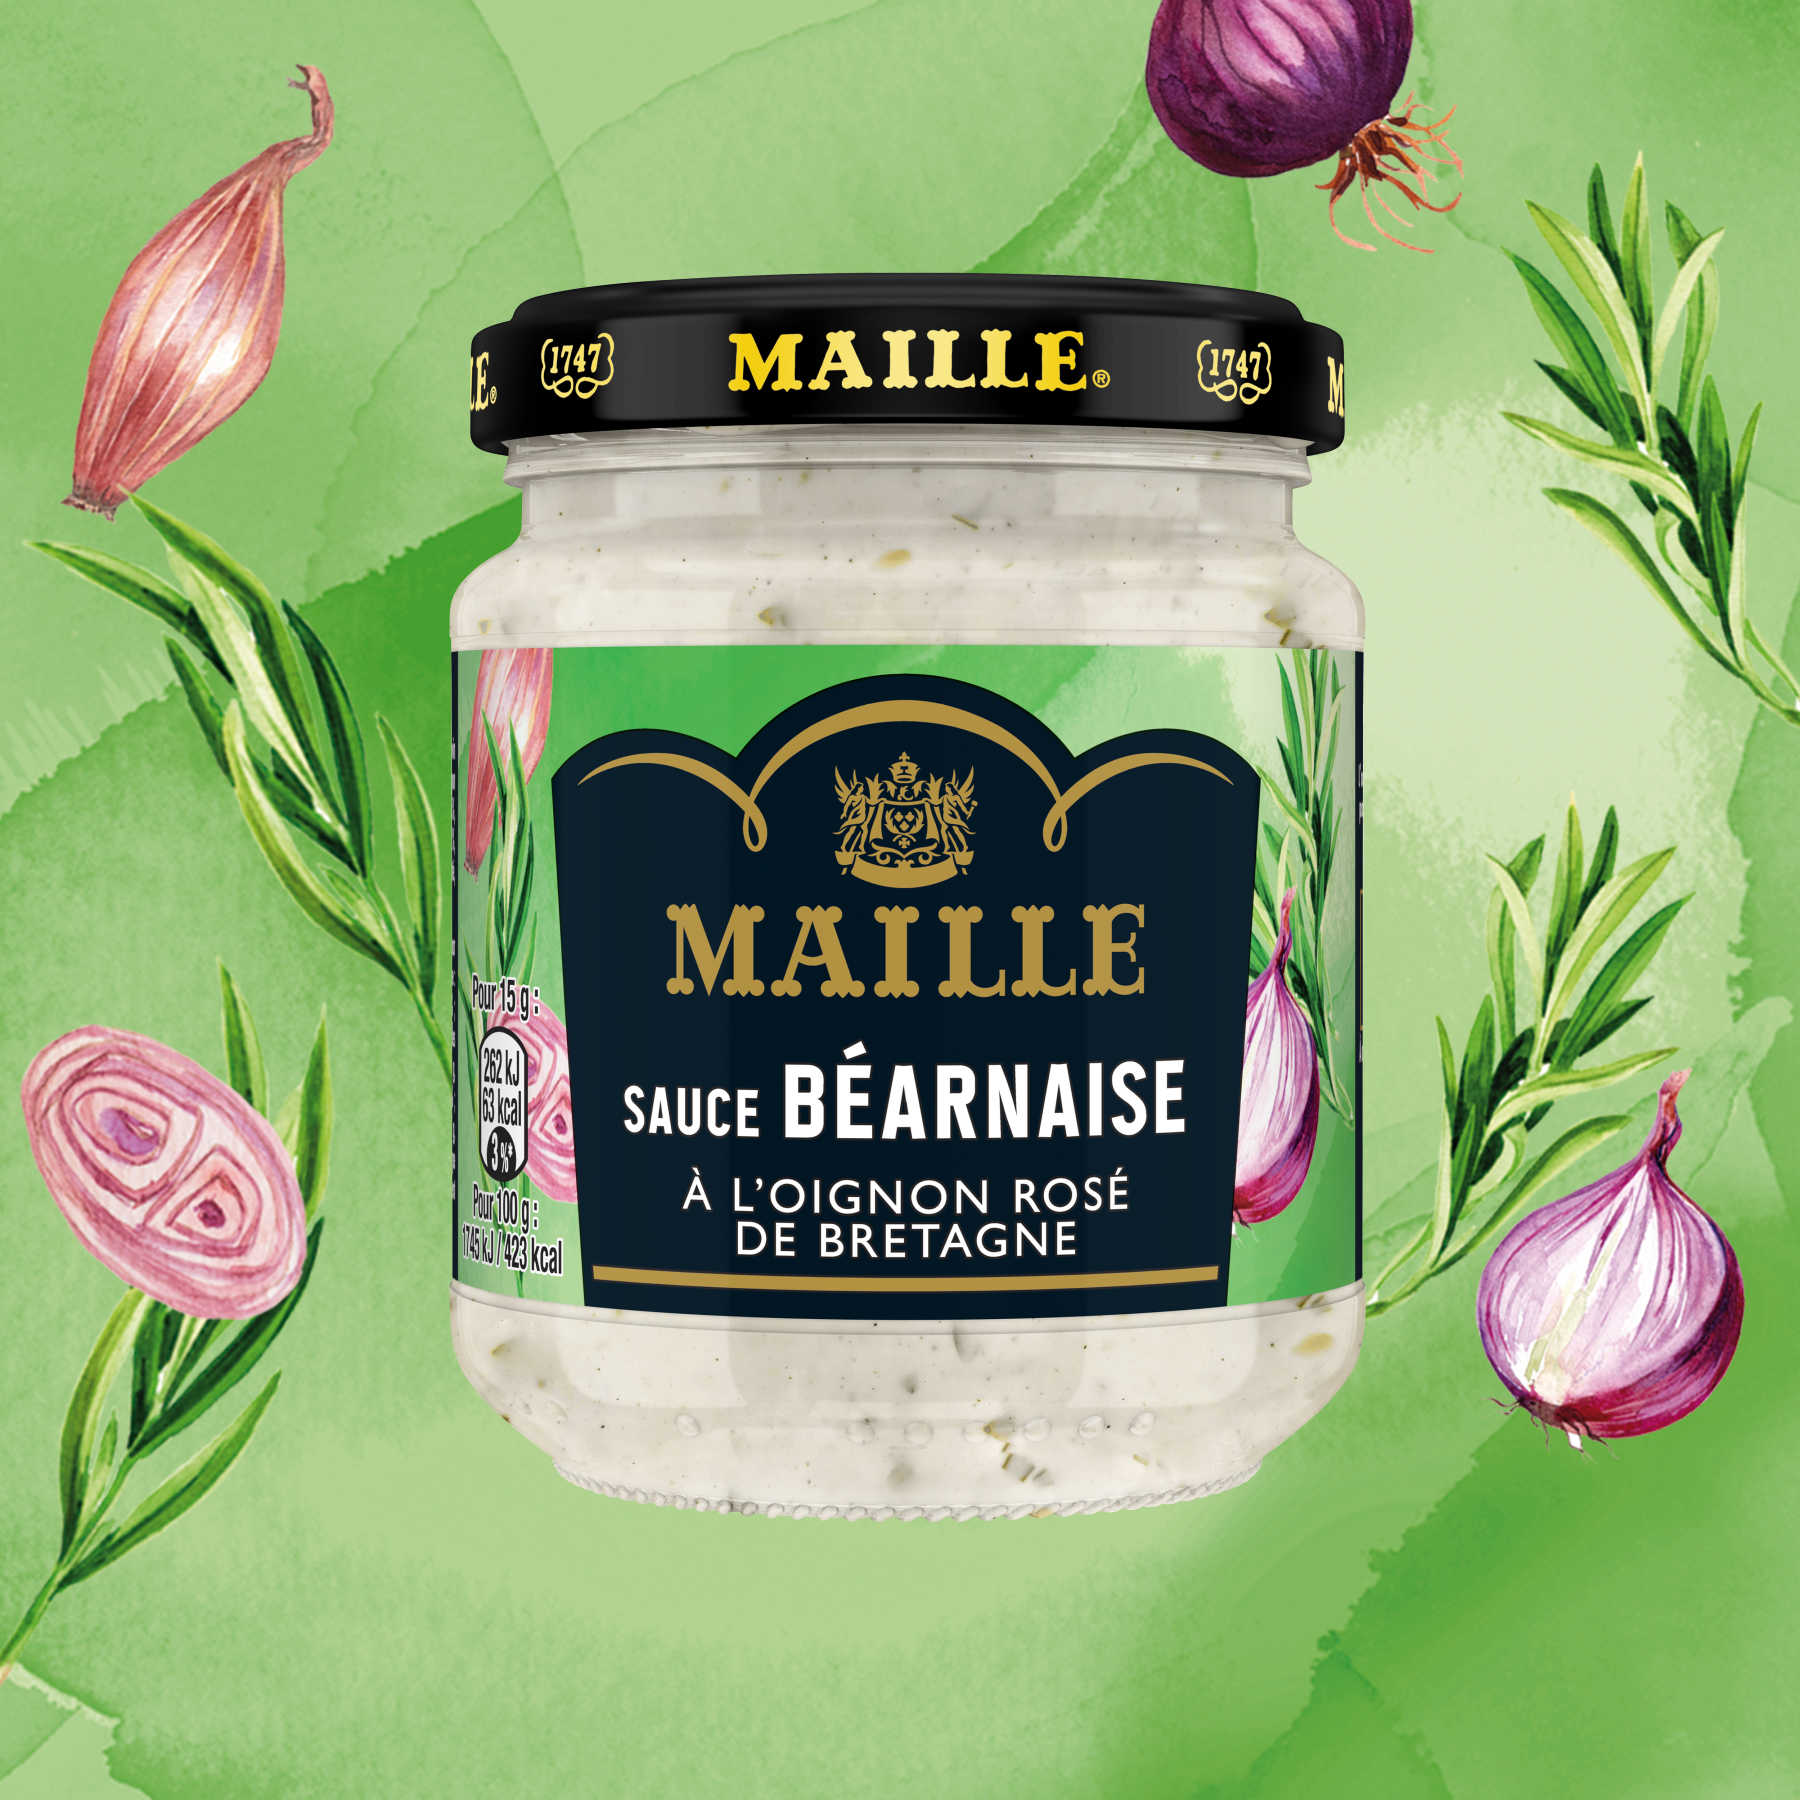 Maille Sauce Bearnaise